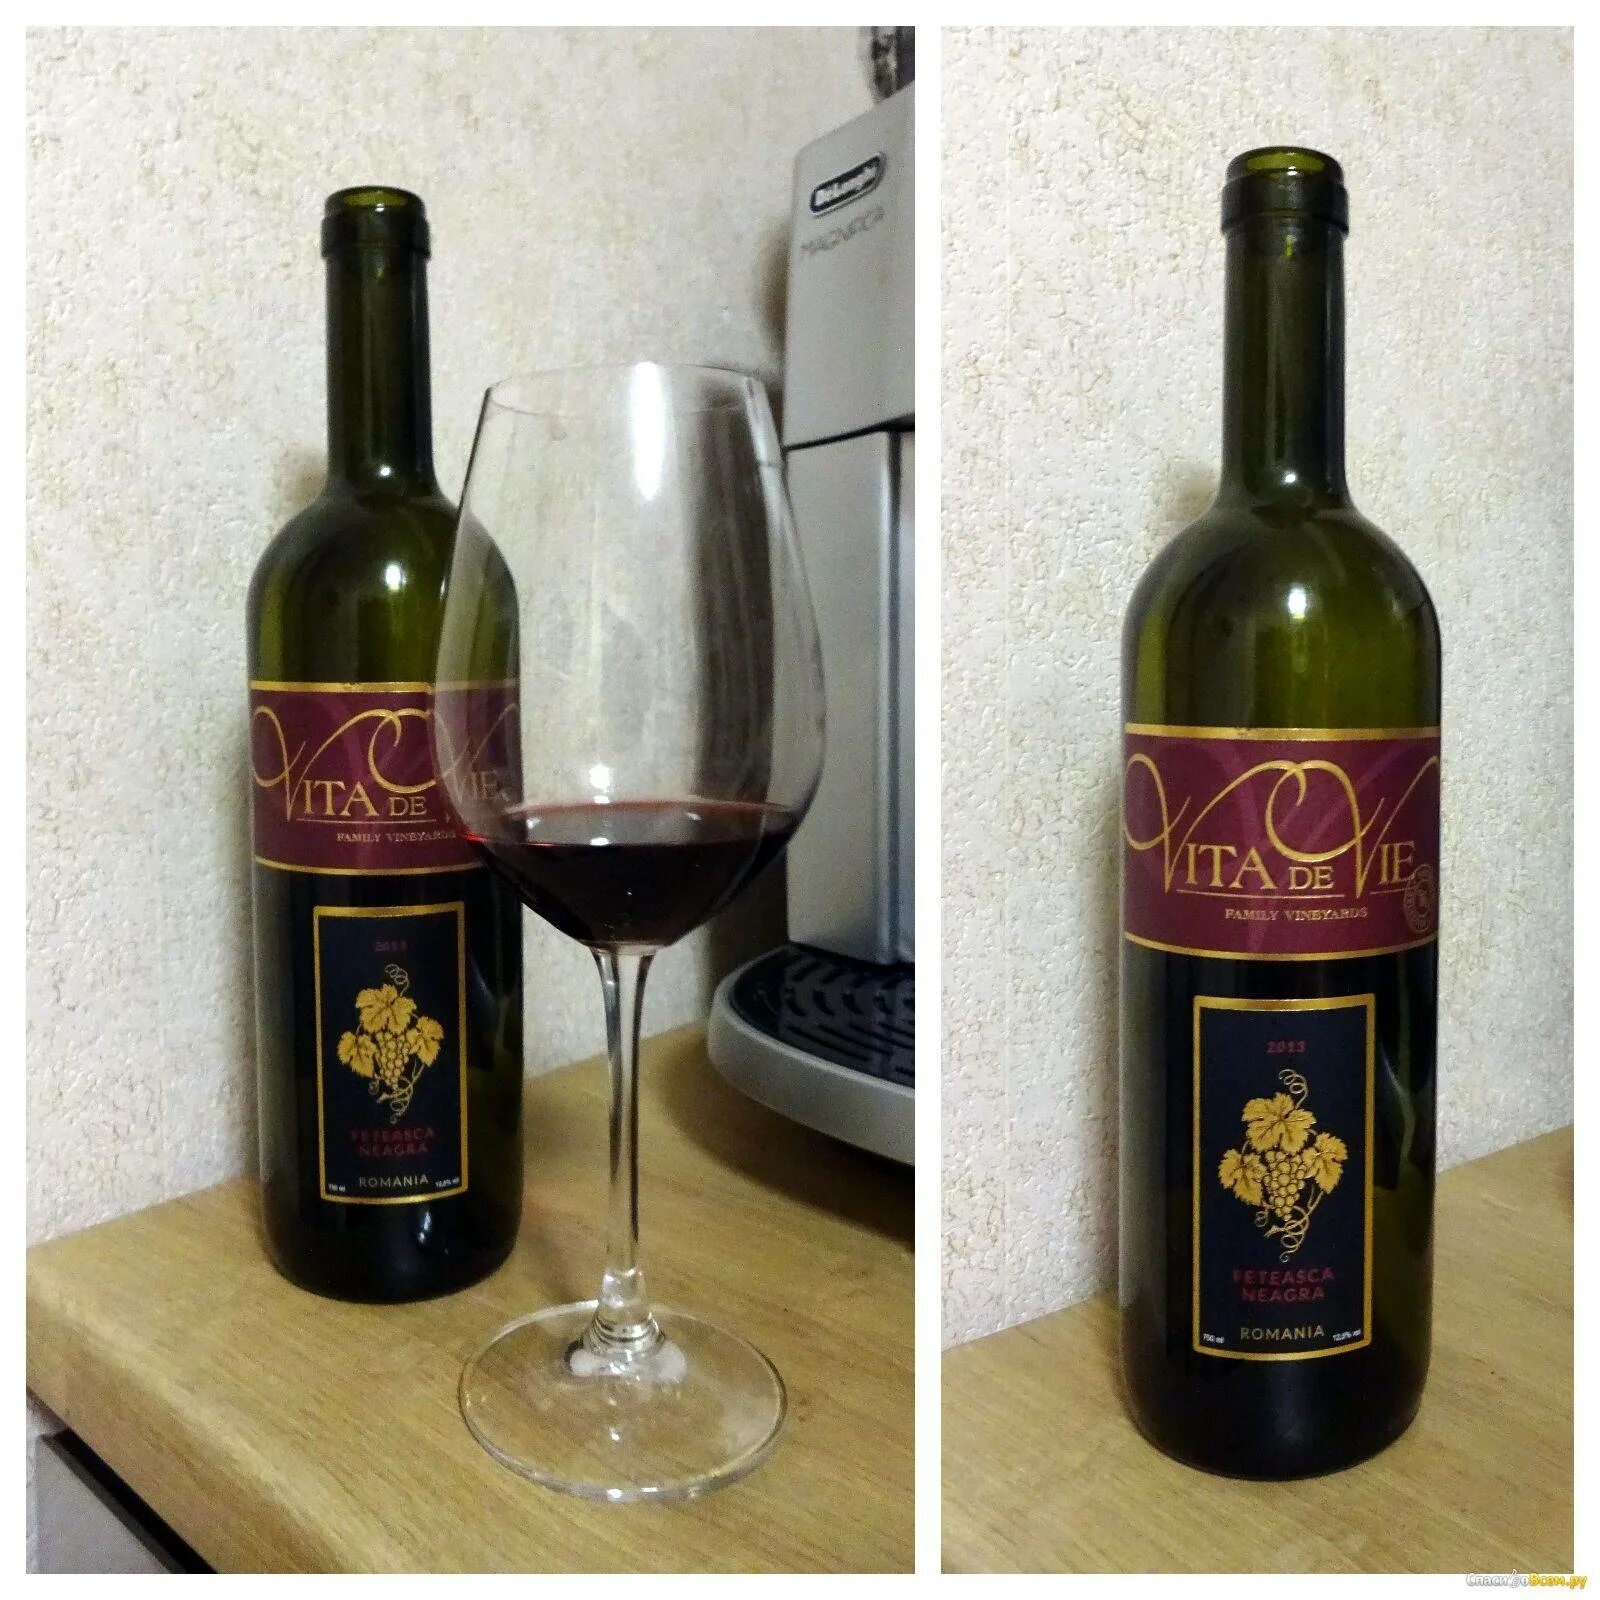 Feteasca neagra вино красное. Вино красное сухое Фетяска. Вино Vita de vie. Недорогие вина. Хорошее дешевое вино